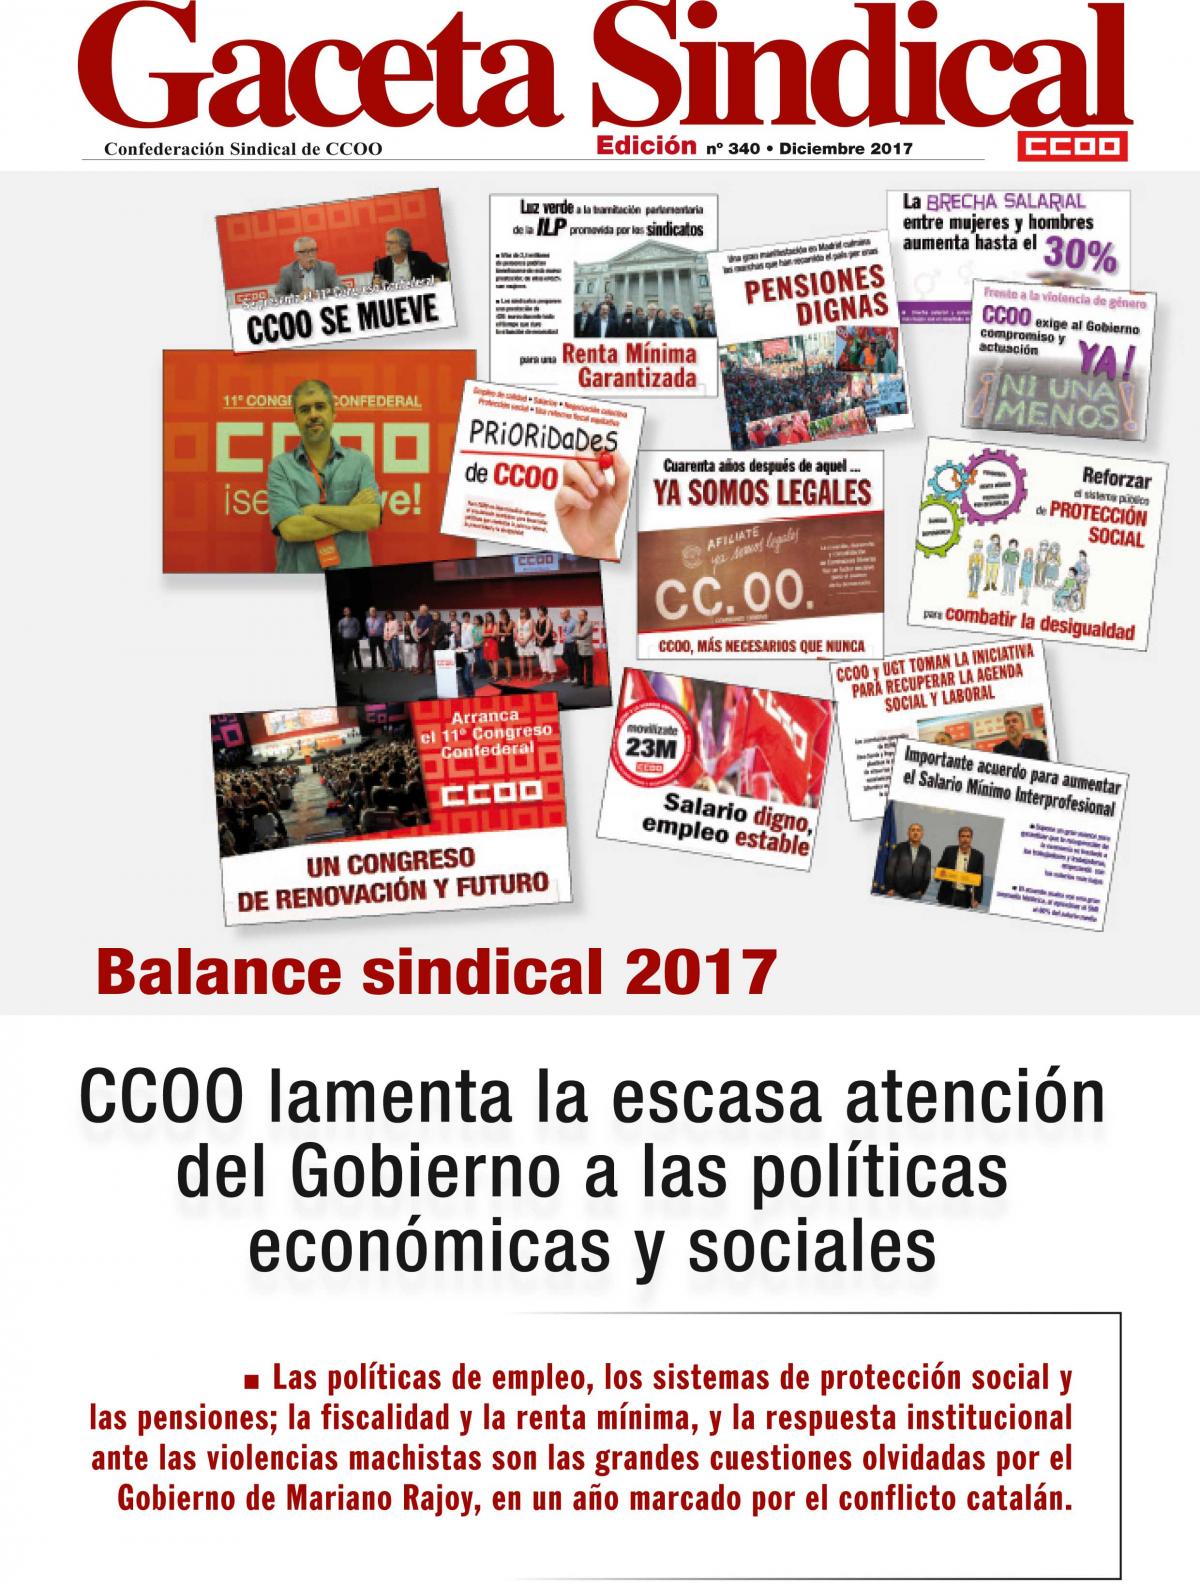 Gaceta Sindical balance 2017